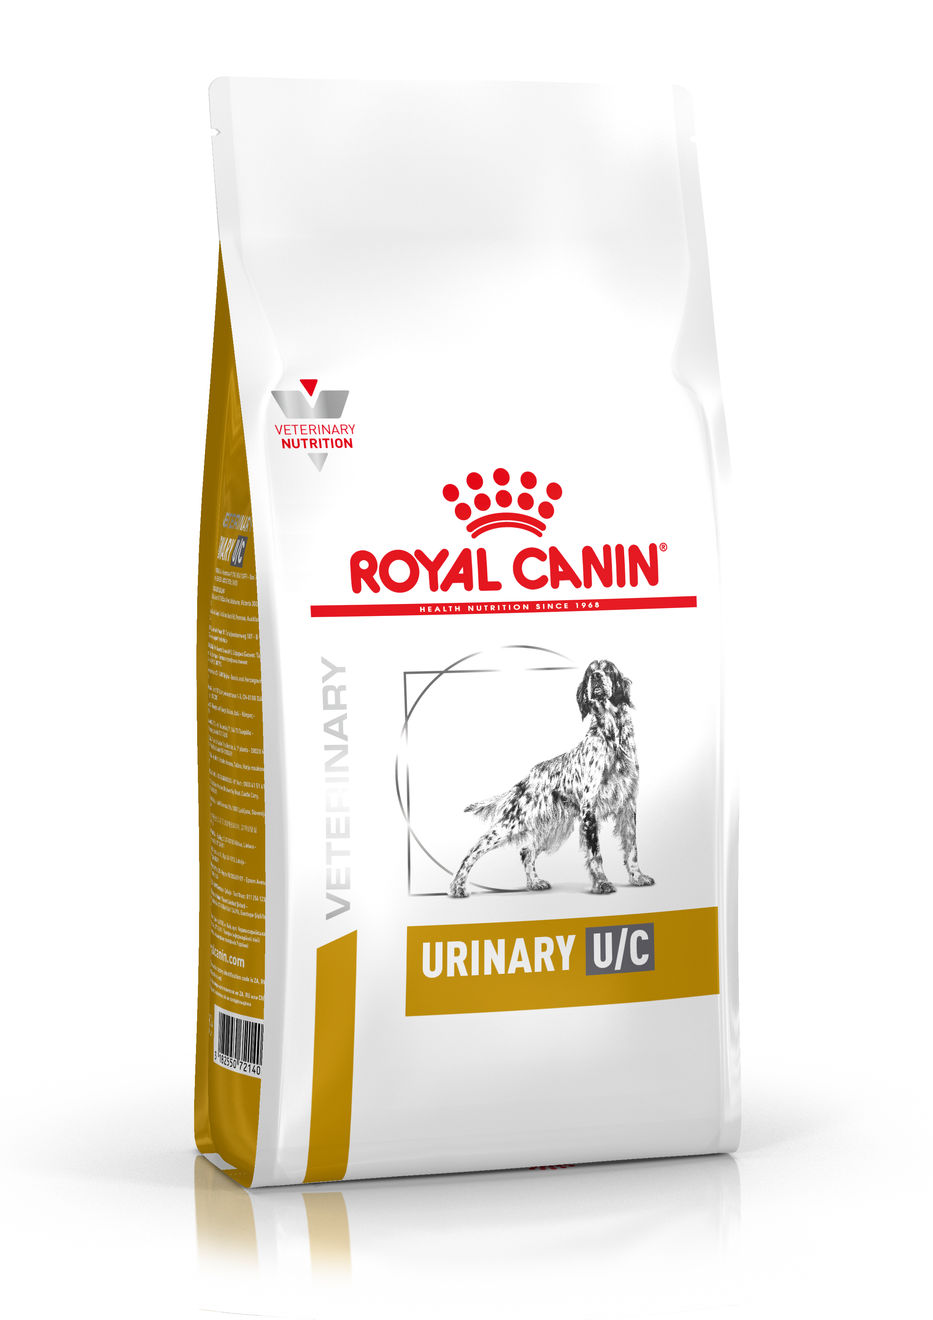 Royal Canin U/C low purine 1 x 7.5 kg